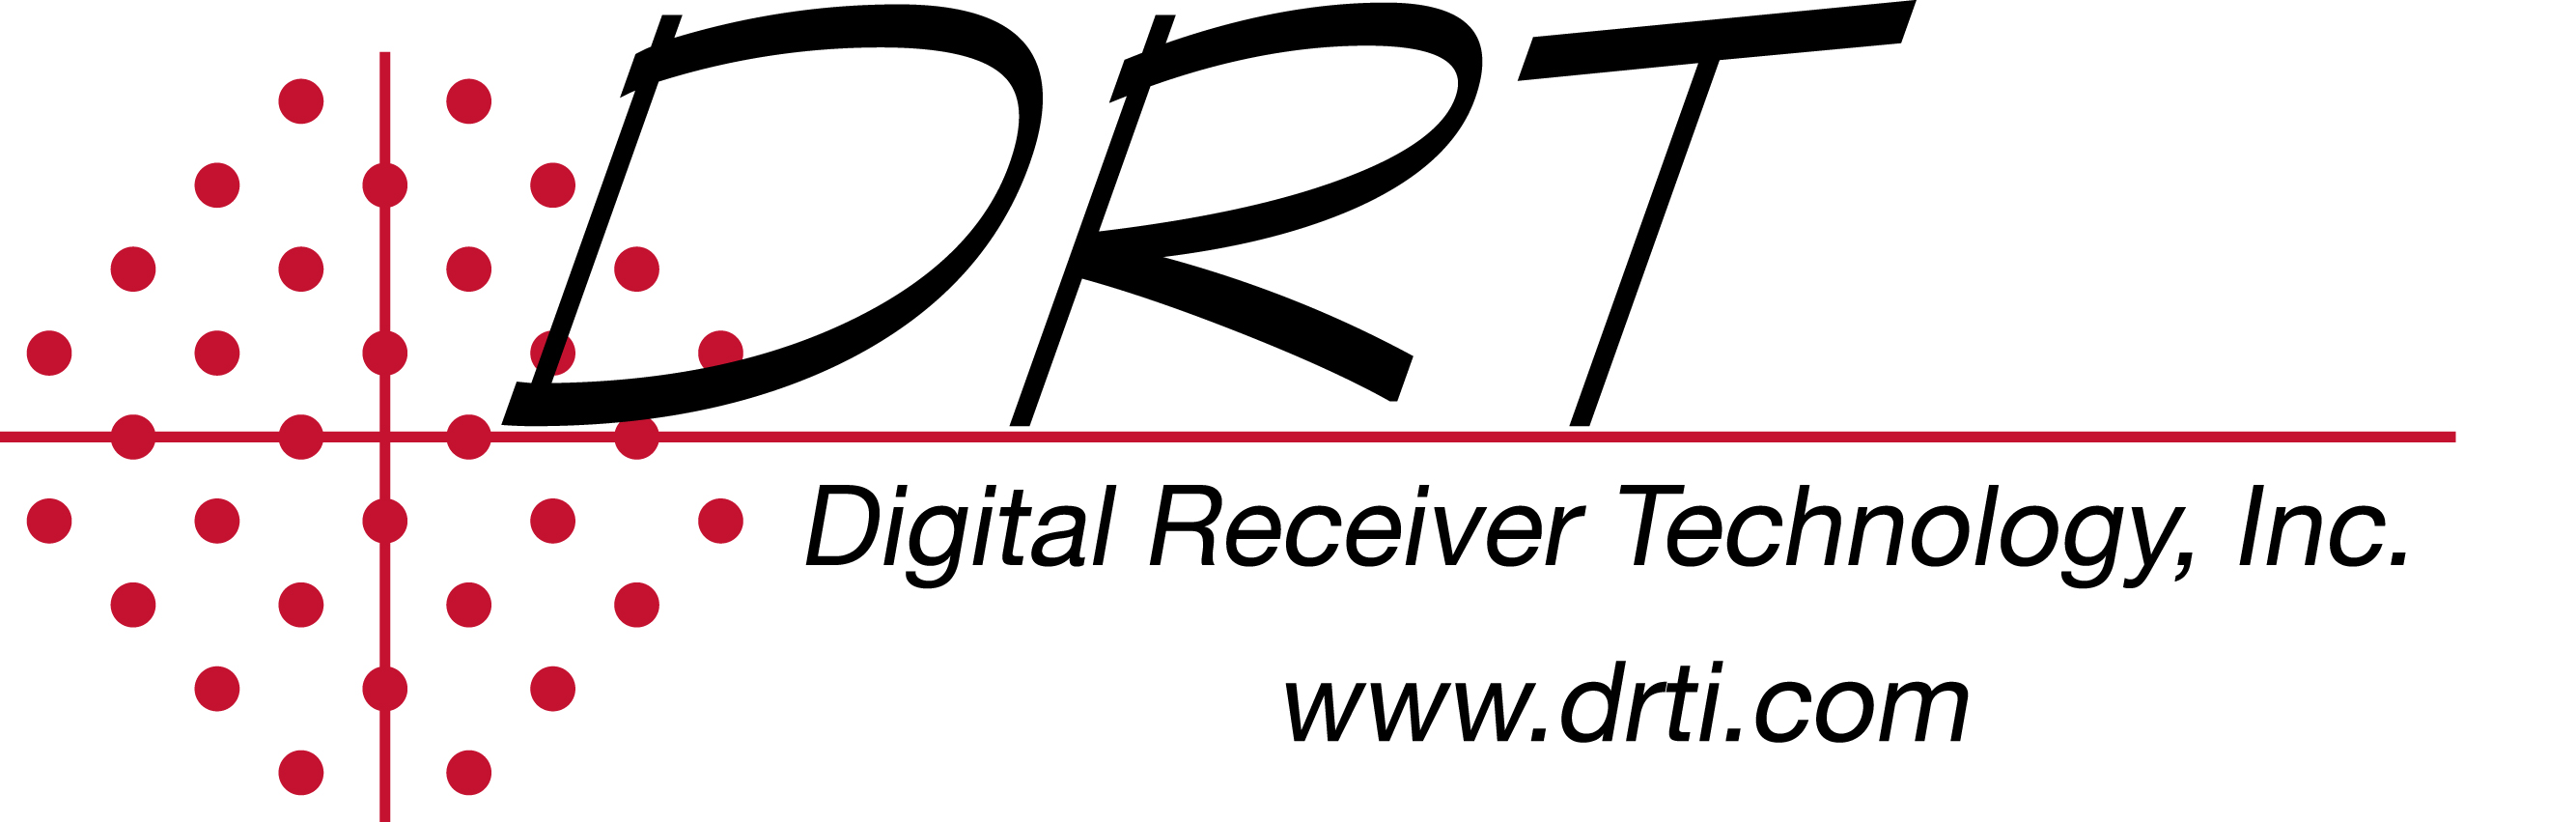 Digital Receiver Technology